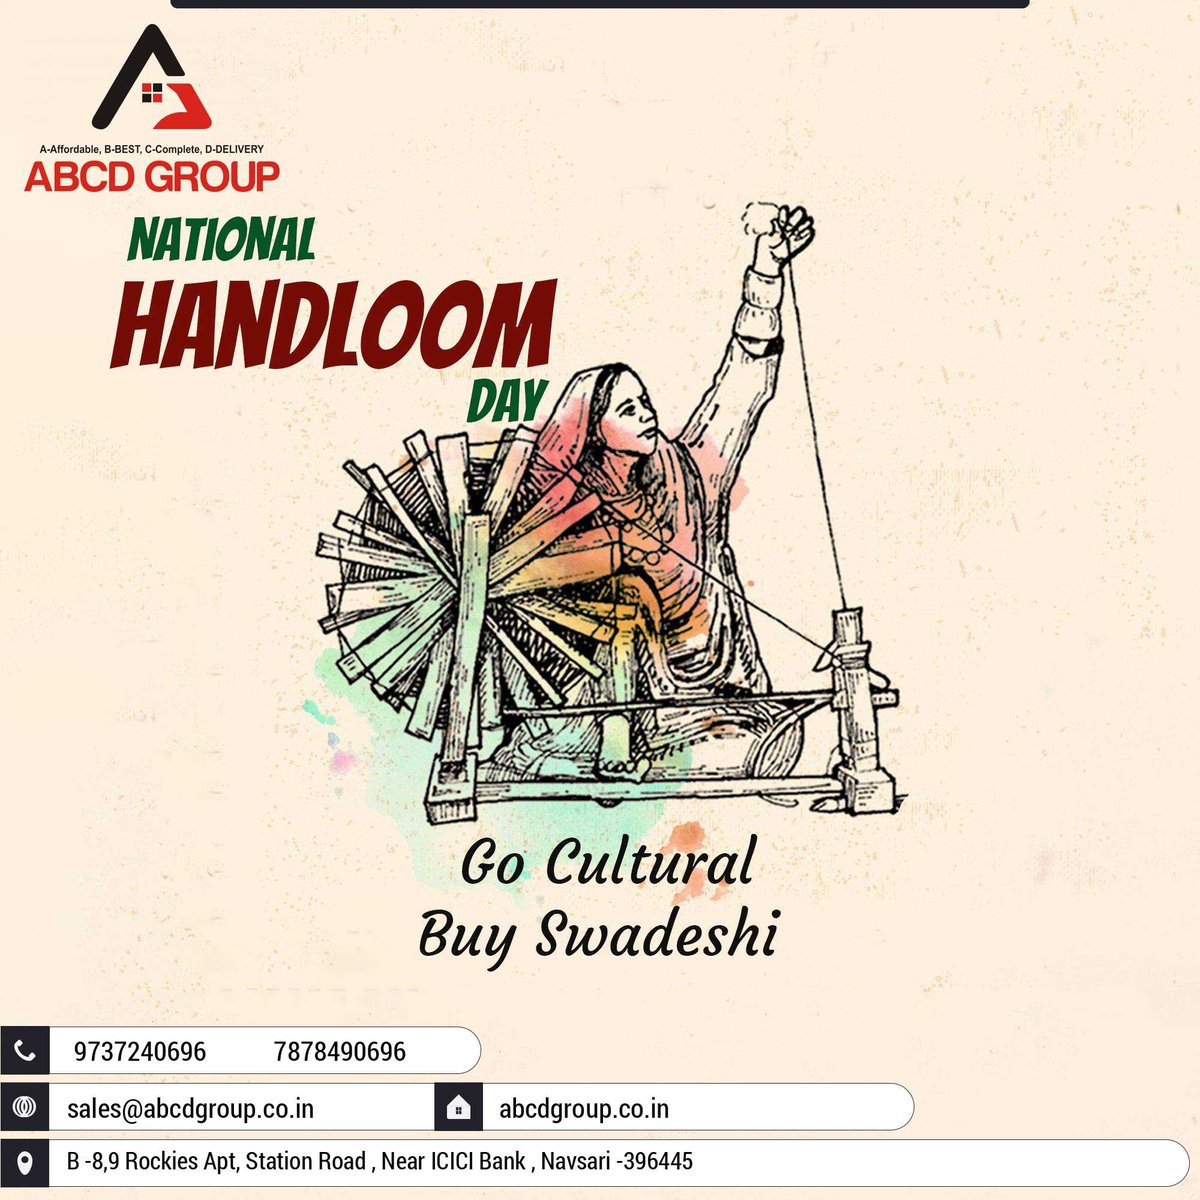 Greetings from ABCD GROUP
                    #Craftsmanship #handloomlove #Handloom #handlooms #handwoven #HandcraftedFabrics #HandmadeInIndia